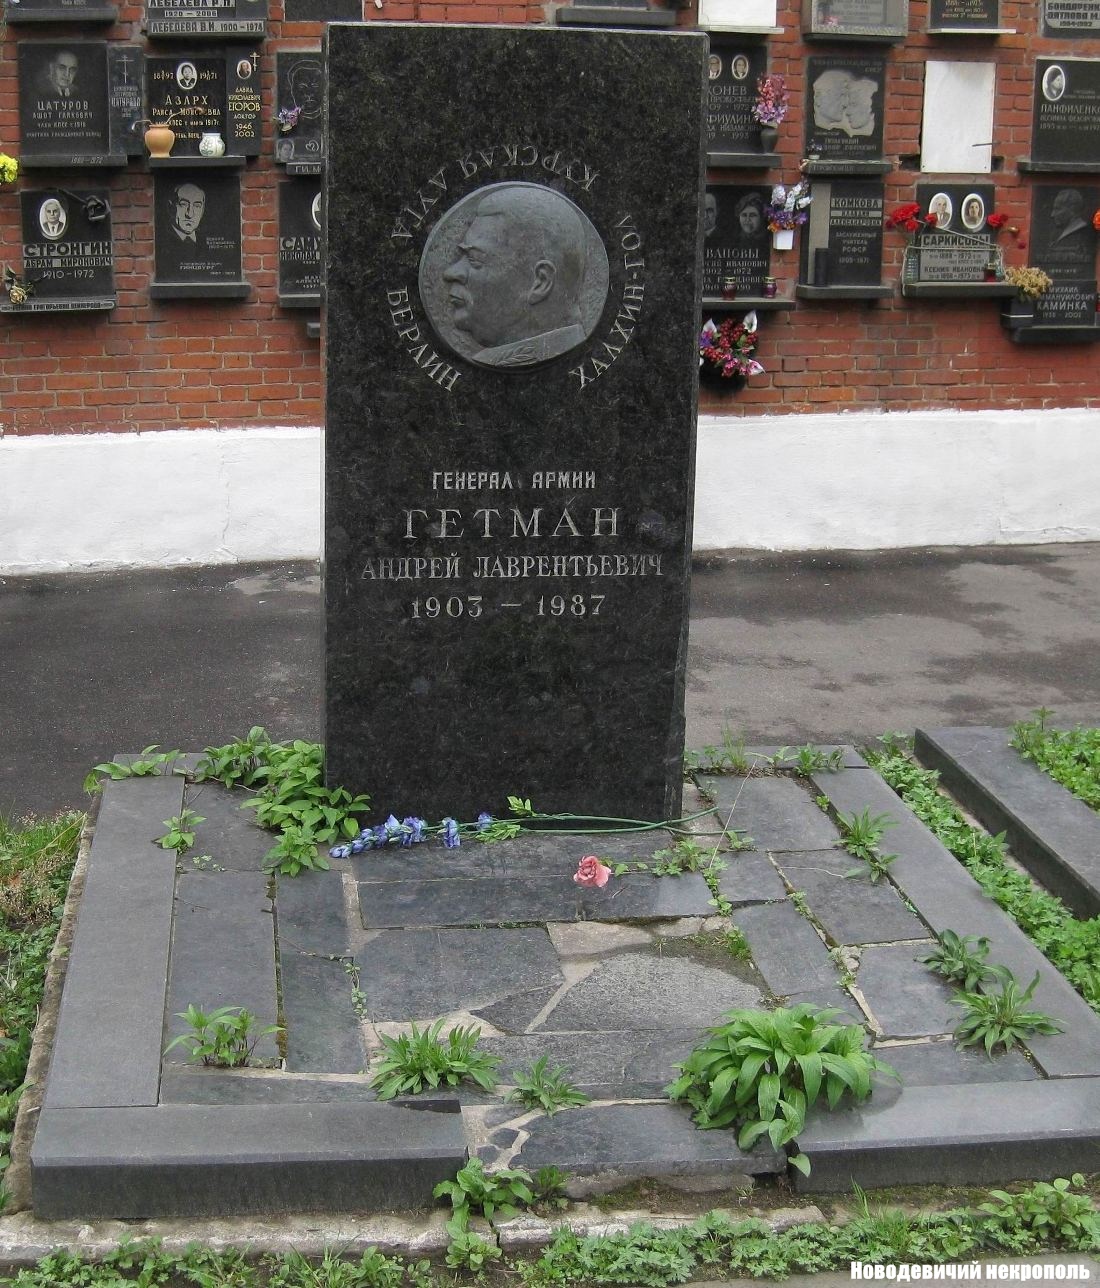 Памятник на могиле Гетмана А.Л. (1903-1987), арх. Е.Ефремов, на Новодевичьем кладбище (7-23-3).